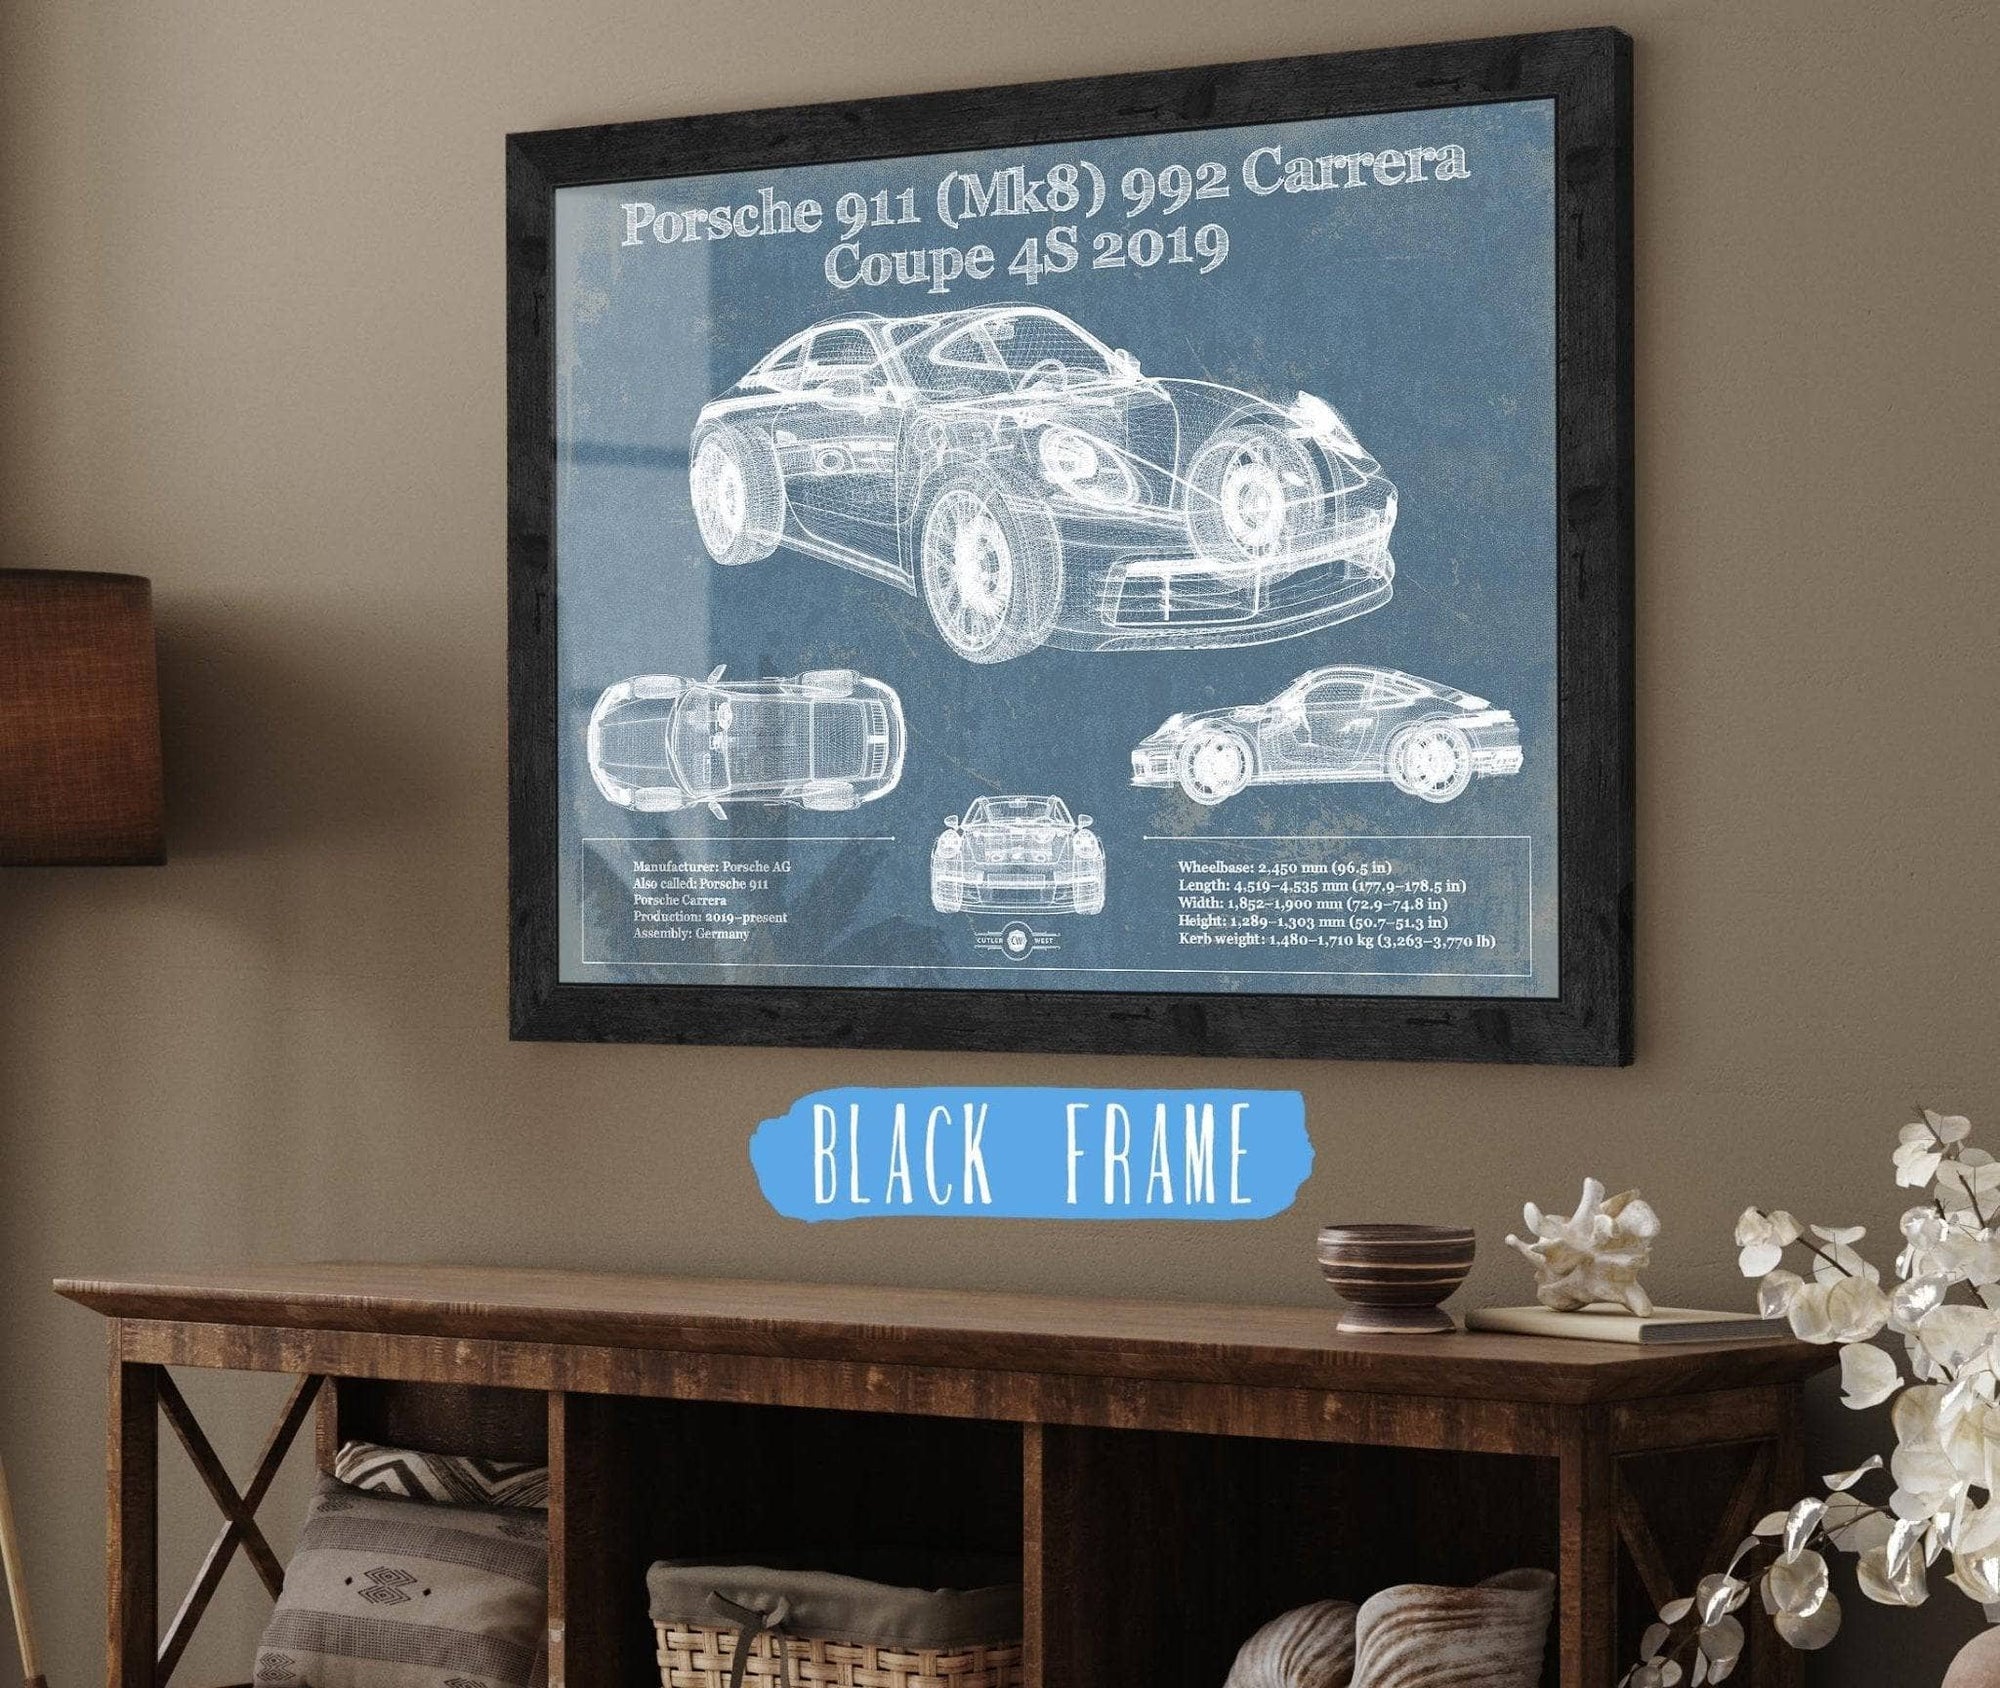 Cutler West Porsche Collection 14" x 11" / Black Frame Porsche 911 Mk8 992 Carrera Coupe 4s 2019 Vintage Blueprint Auto Print 845000299_68554